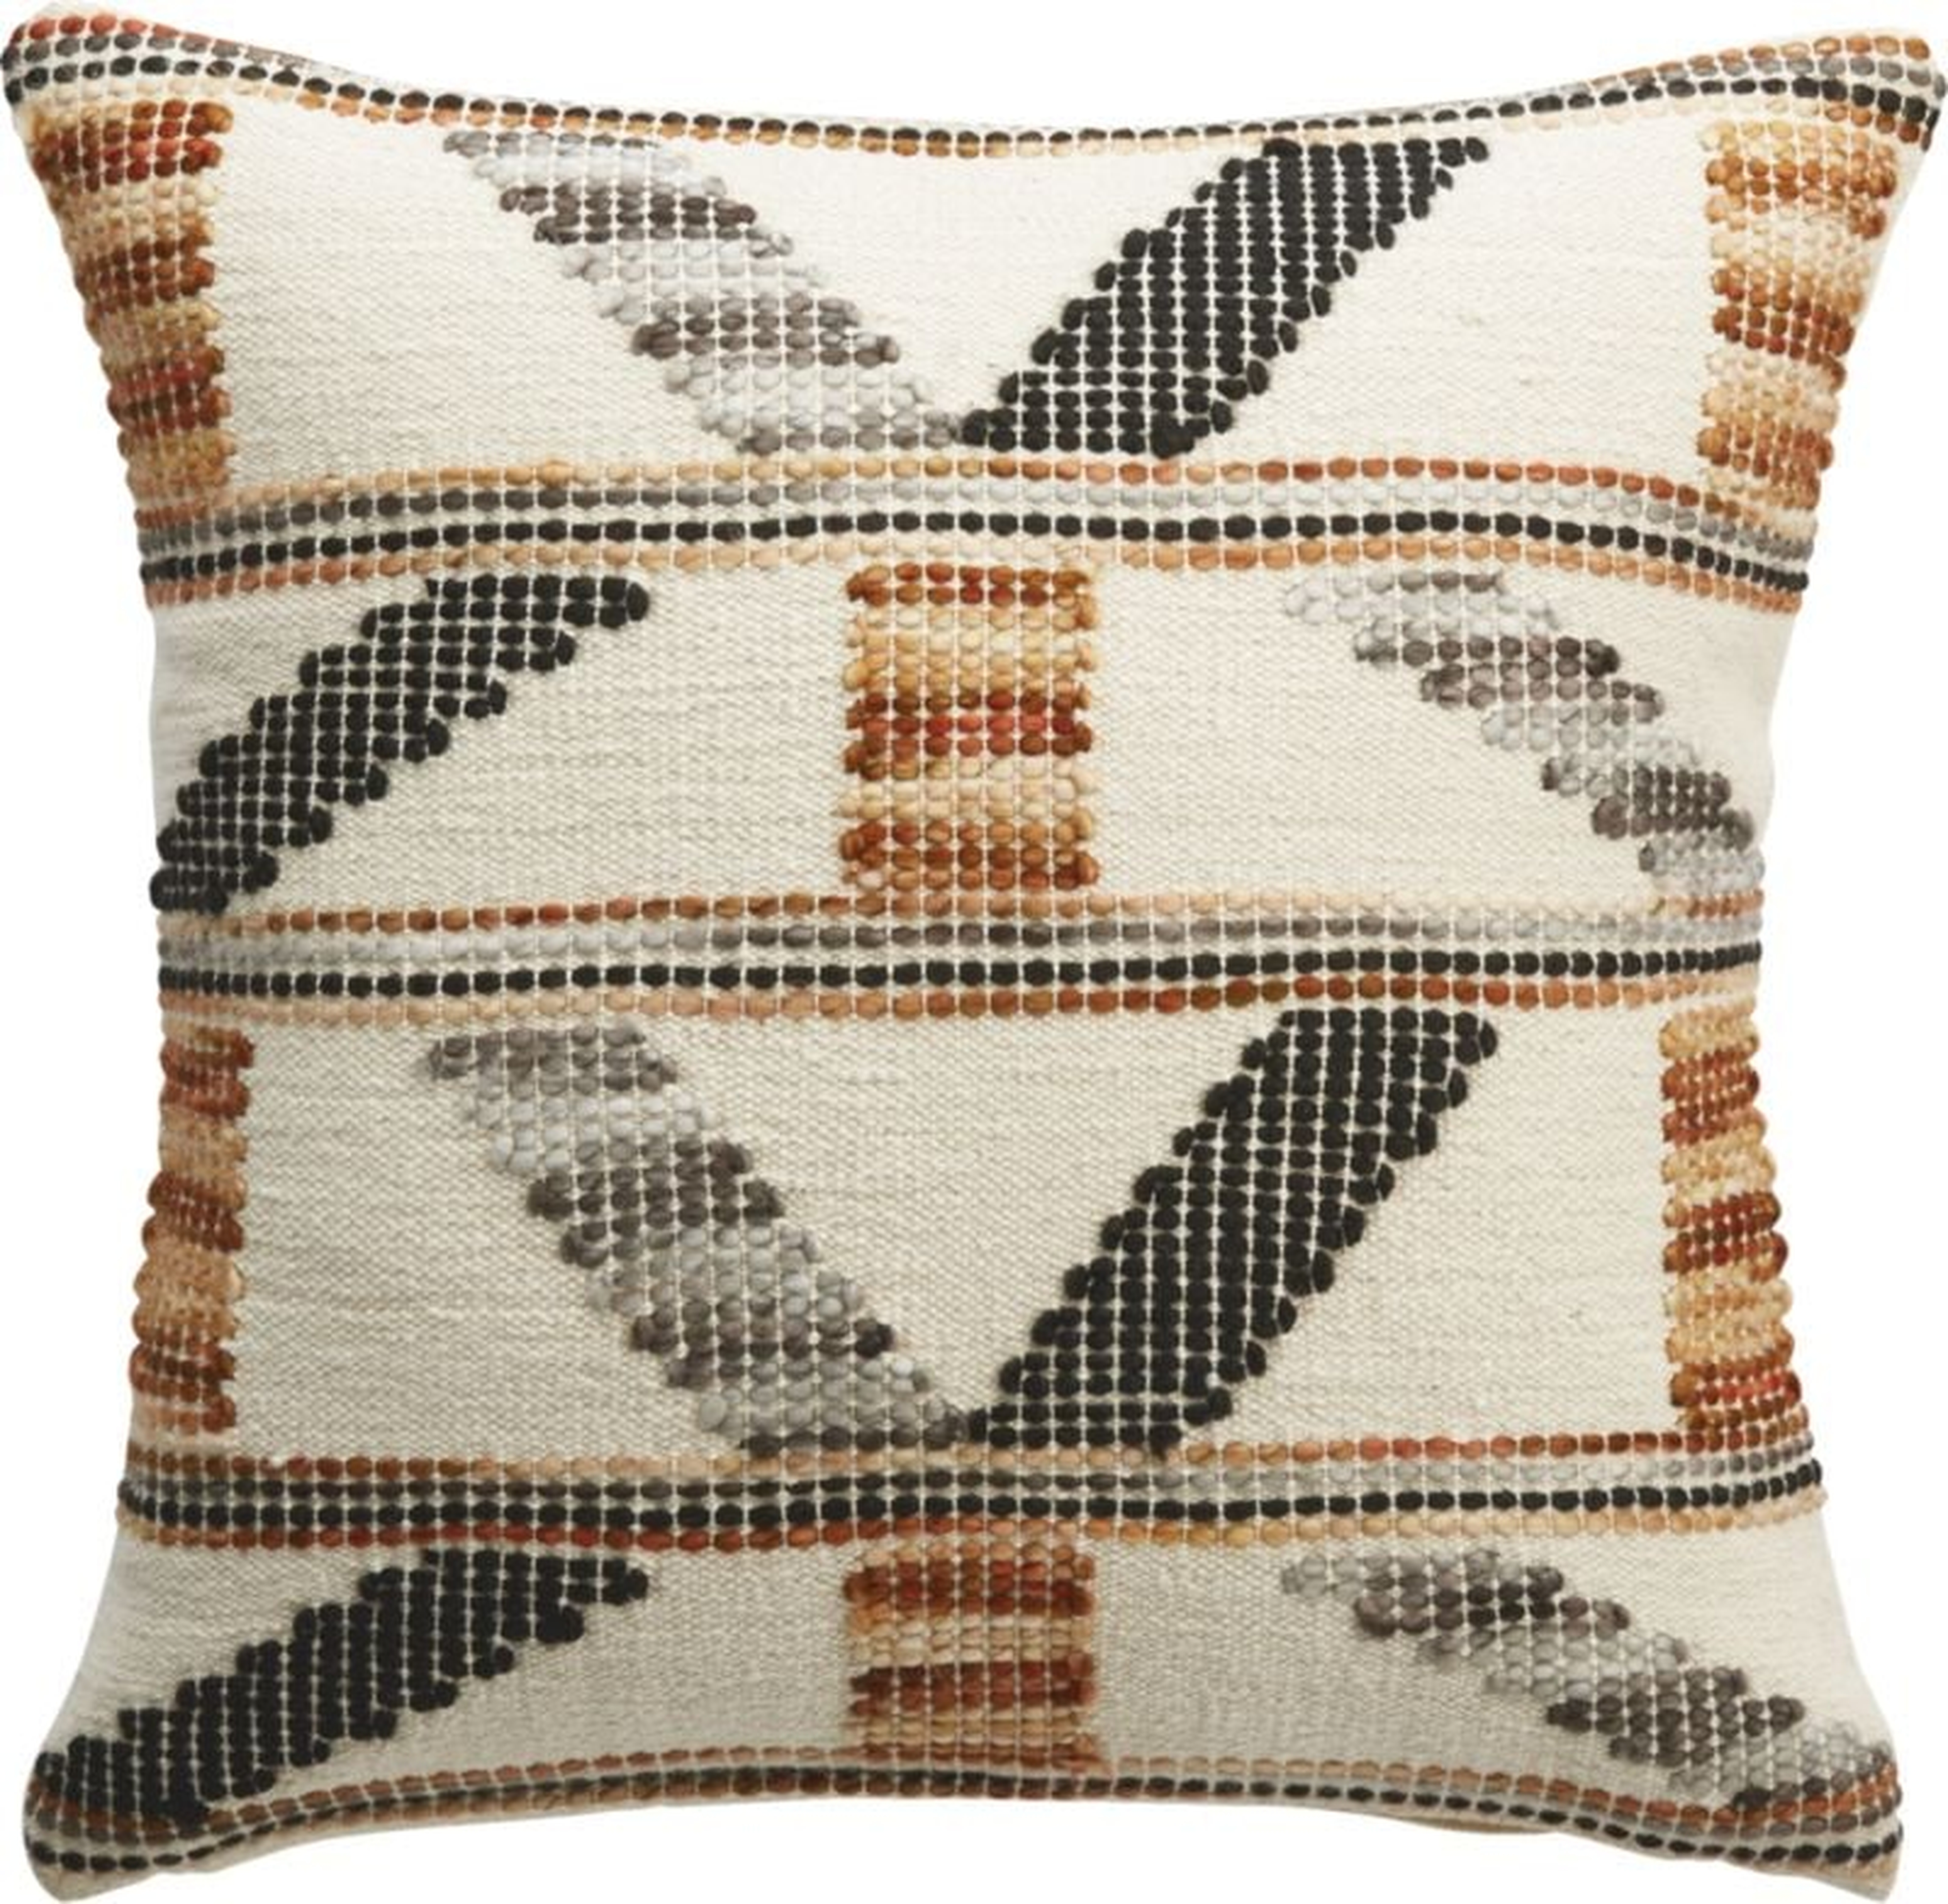 Dorado Handwoven Pillow with Down-Alternative Insert, 16" x 16" - CB2